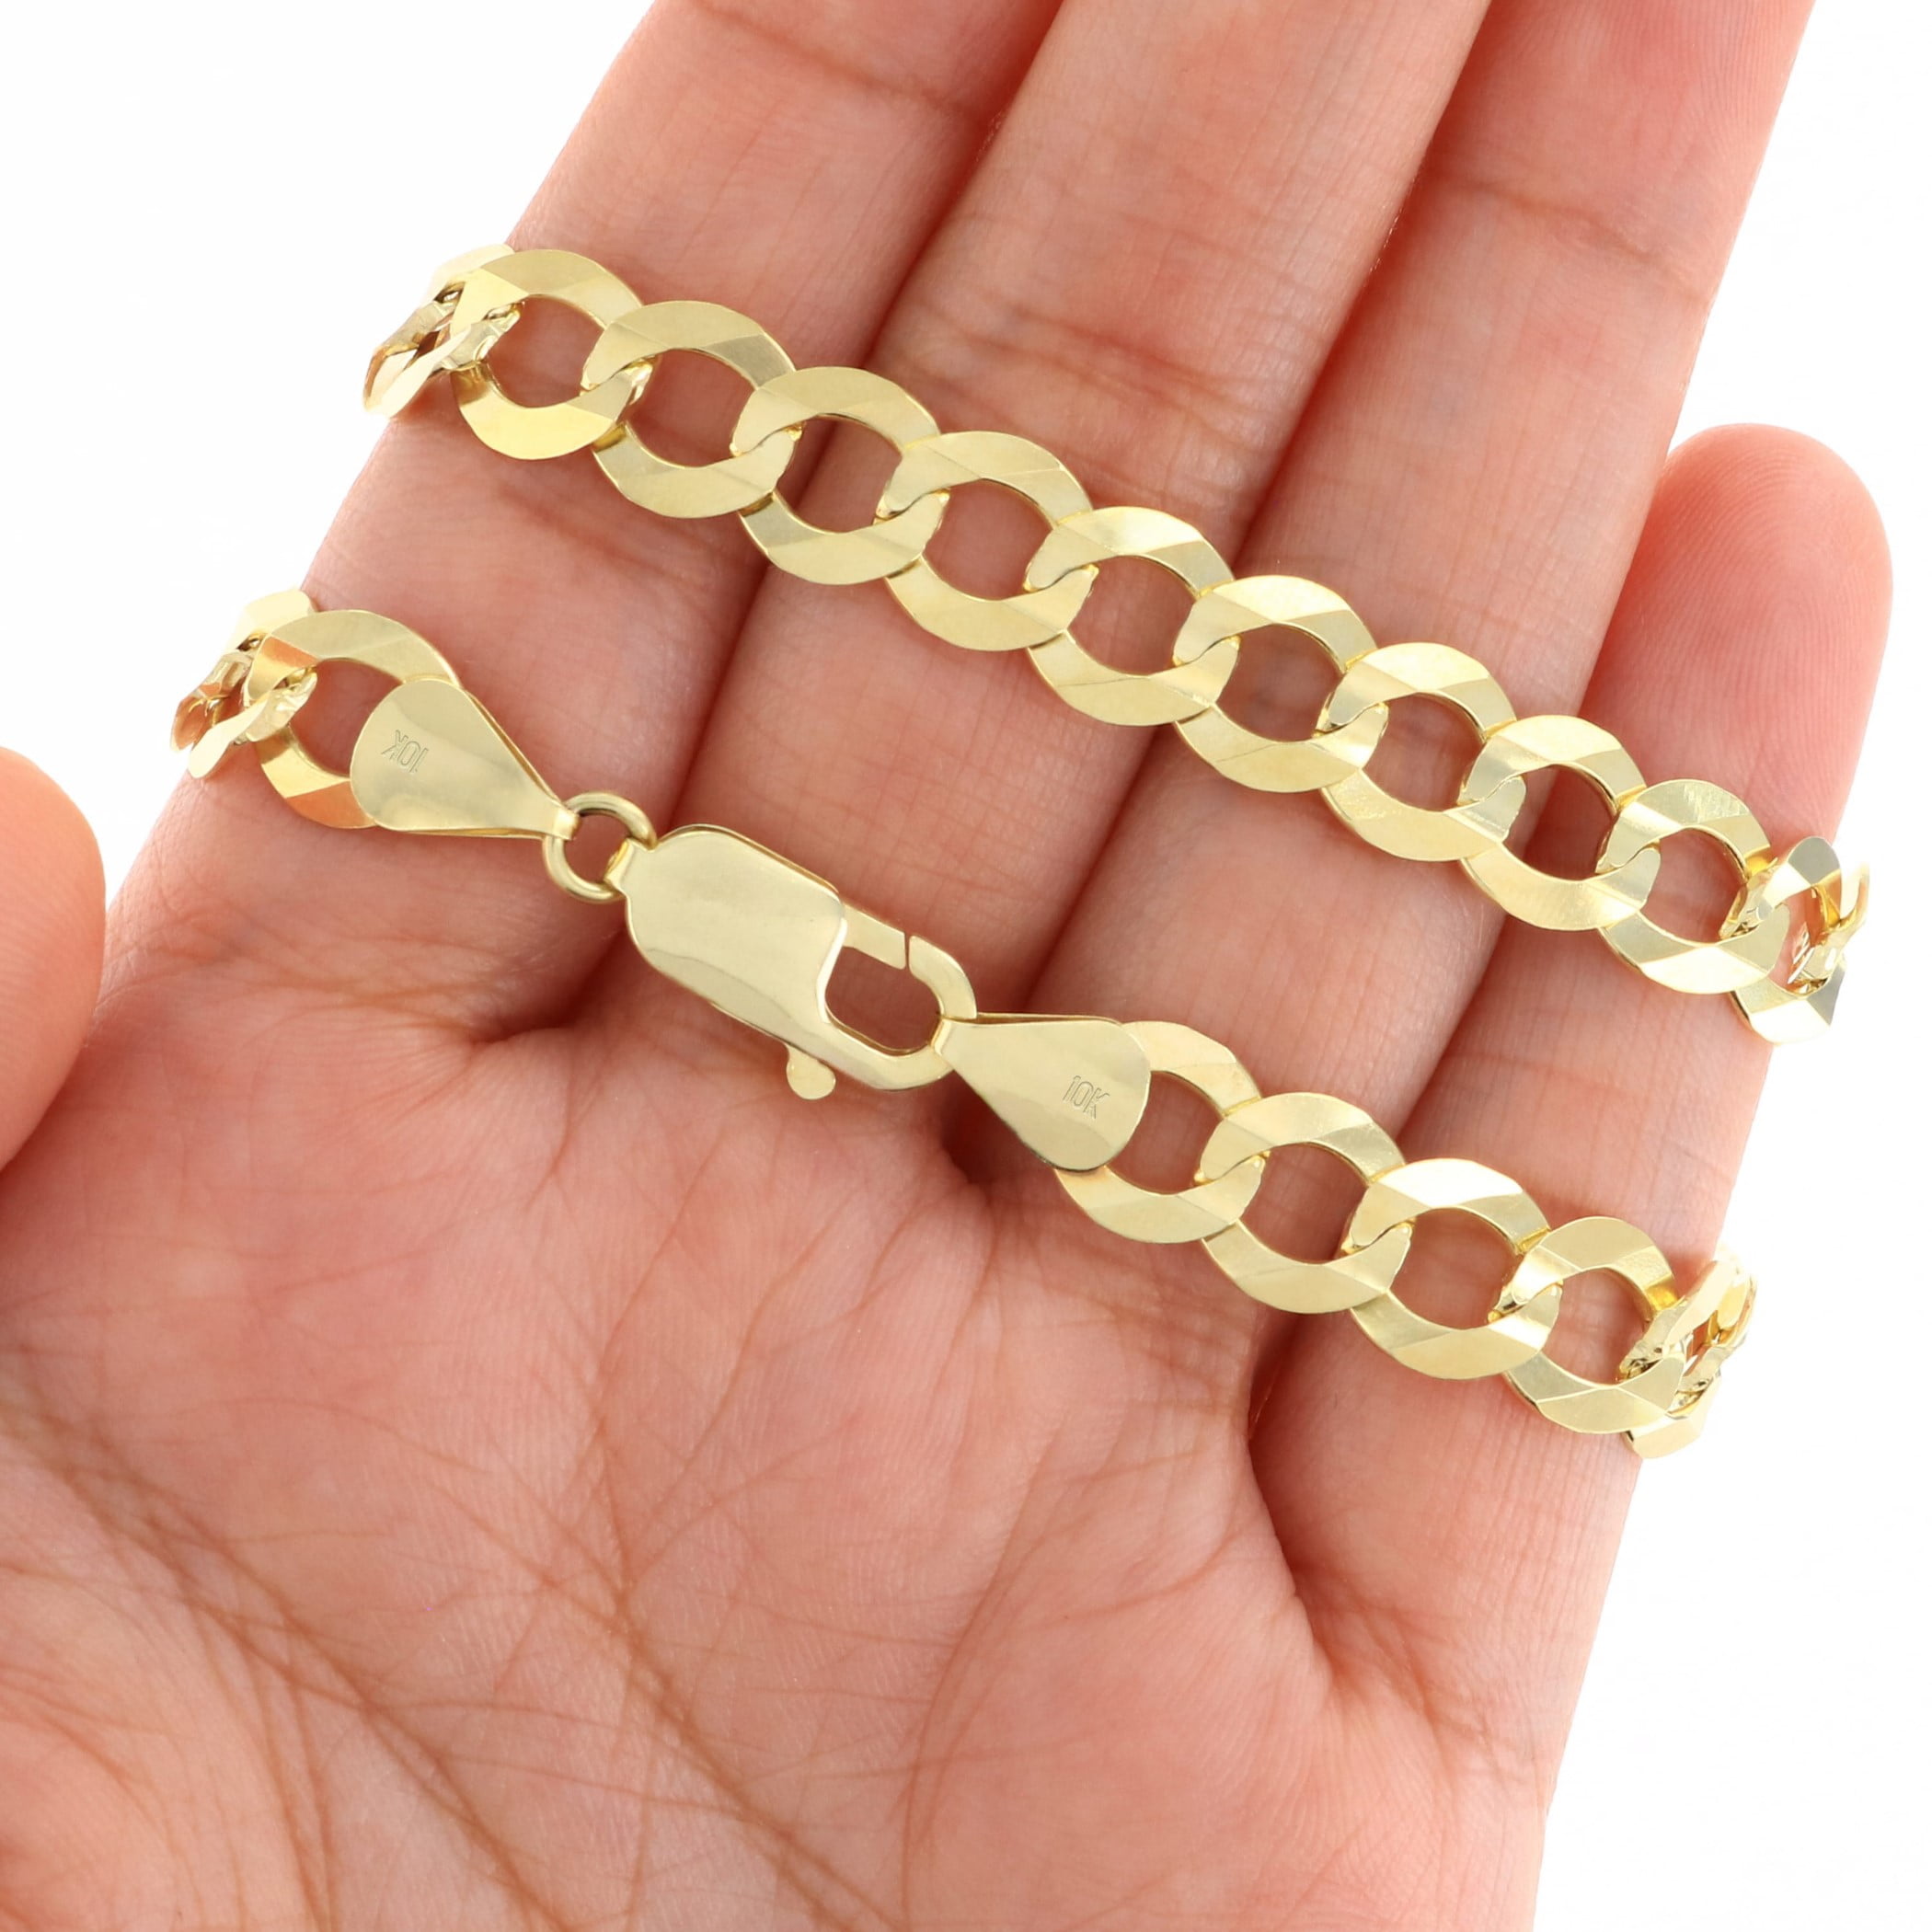 Men's 4ct. tw. Diamond Link Bracelet in 10k Yellow Gold